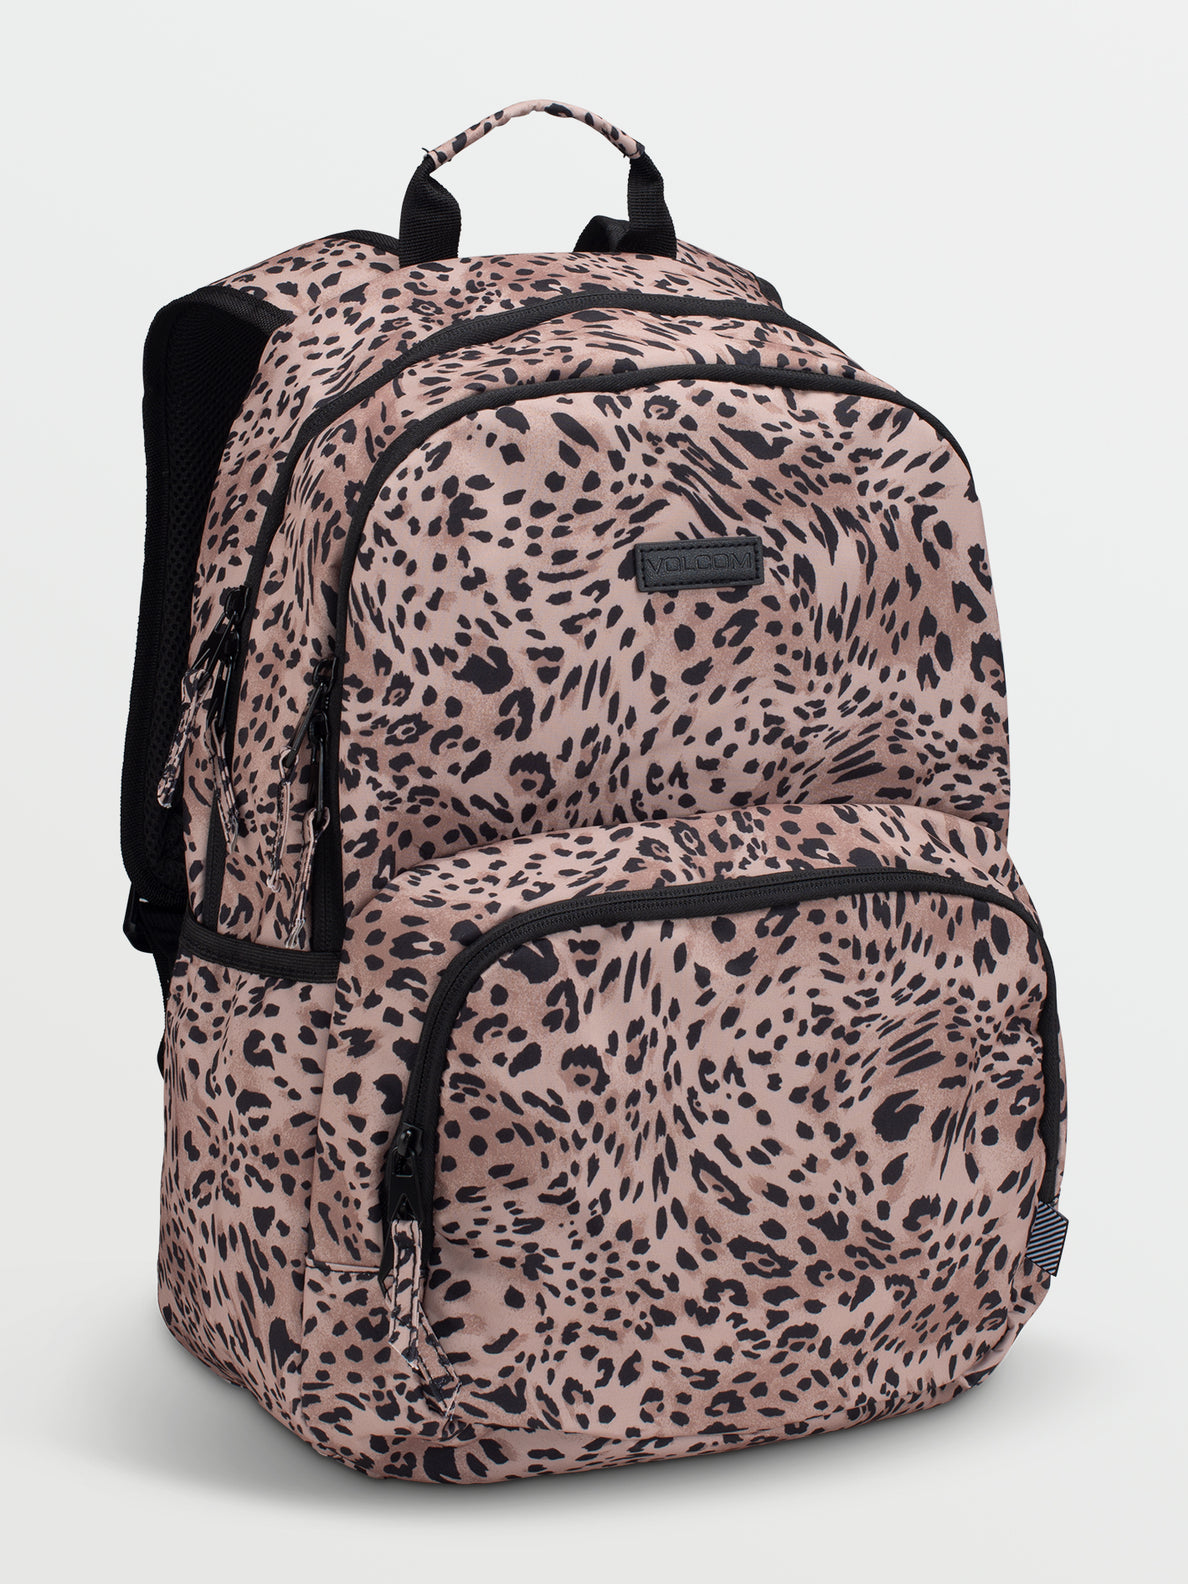 3 Pieces Brown Leopard Animal Cheetah Print School Bags for Kids